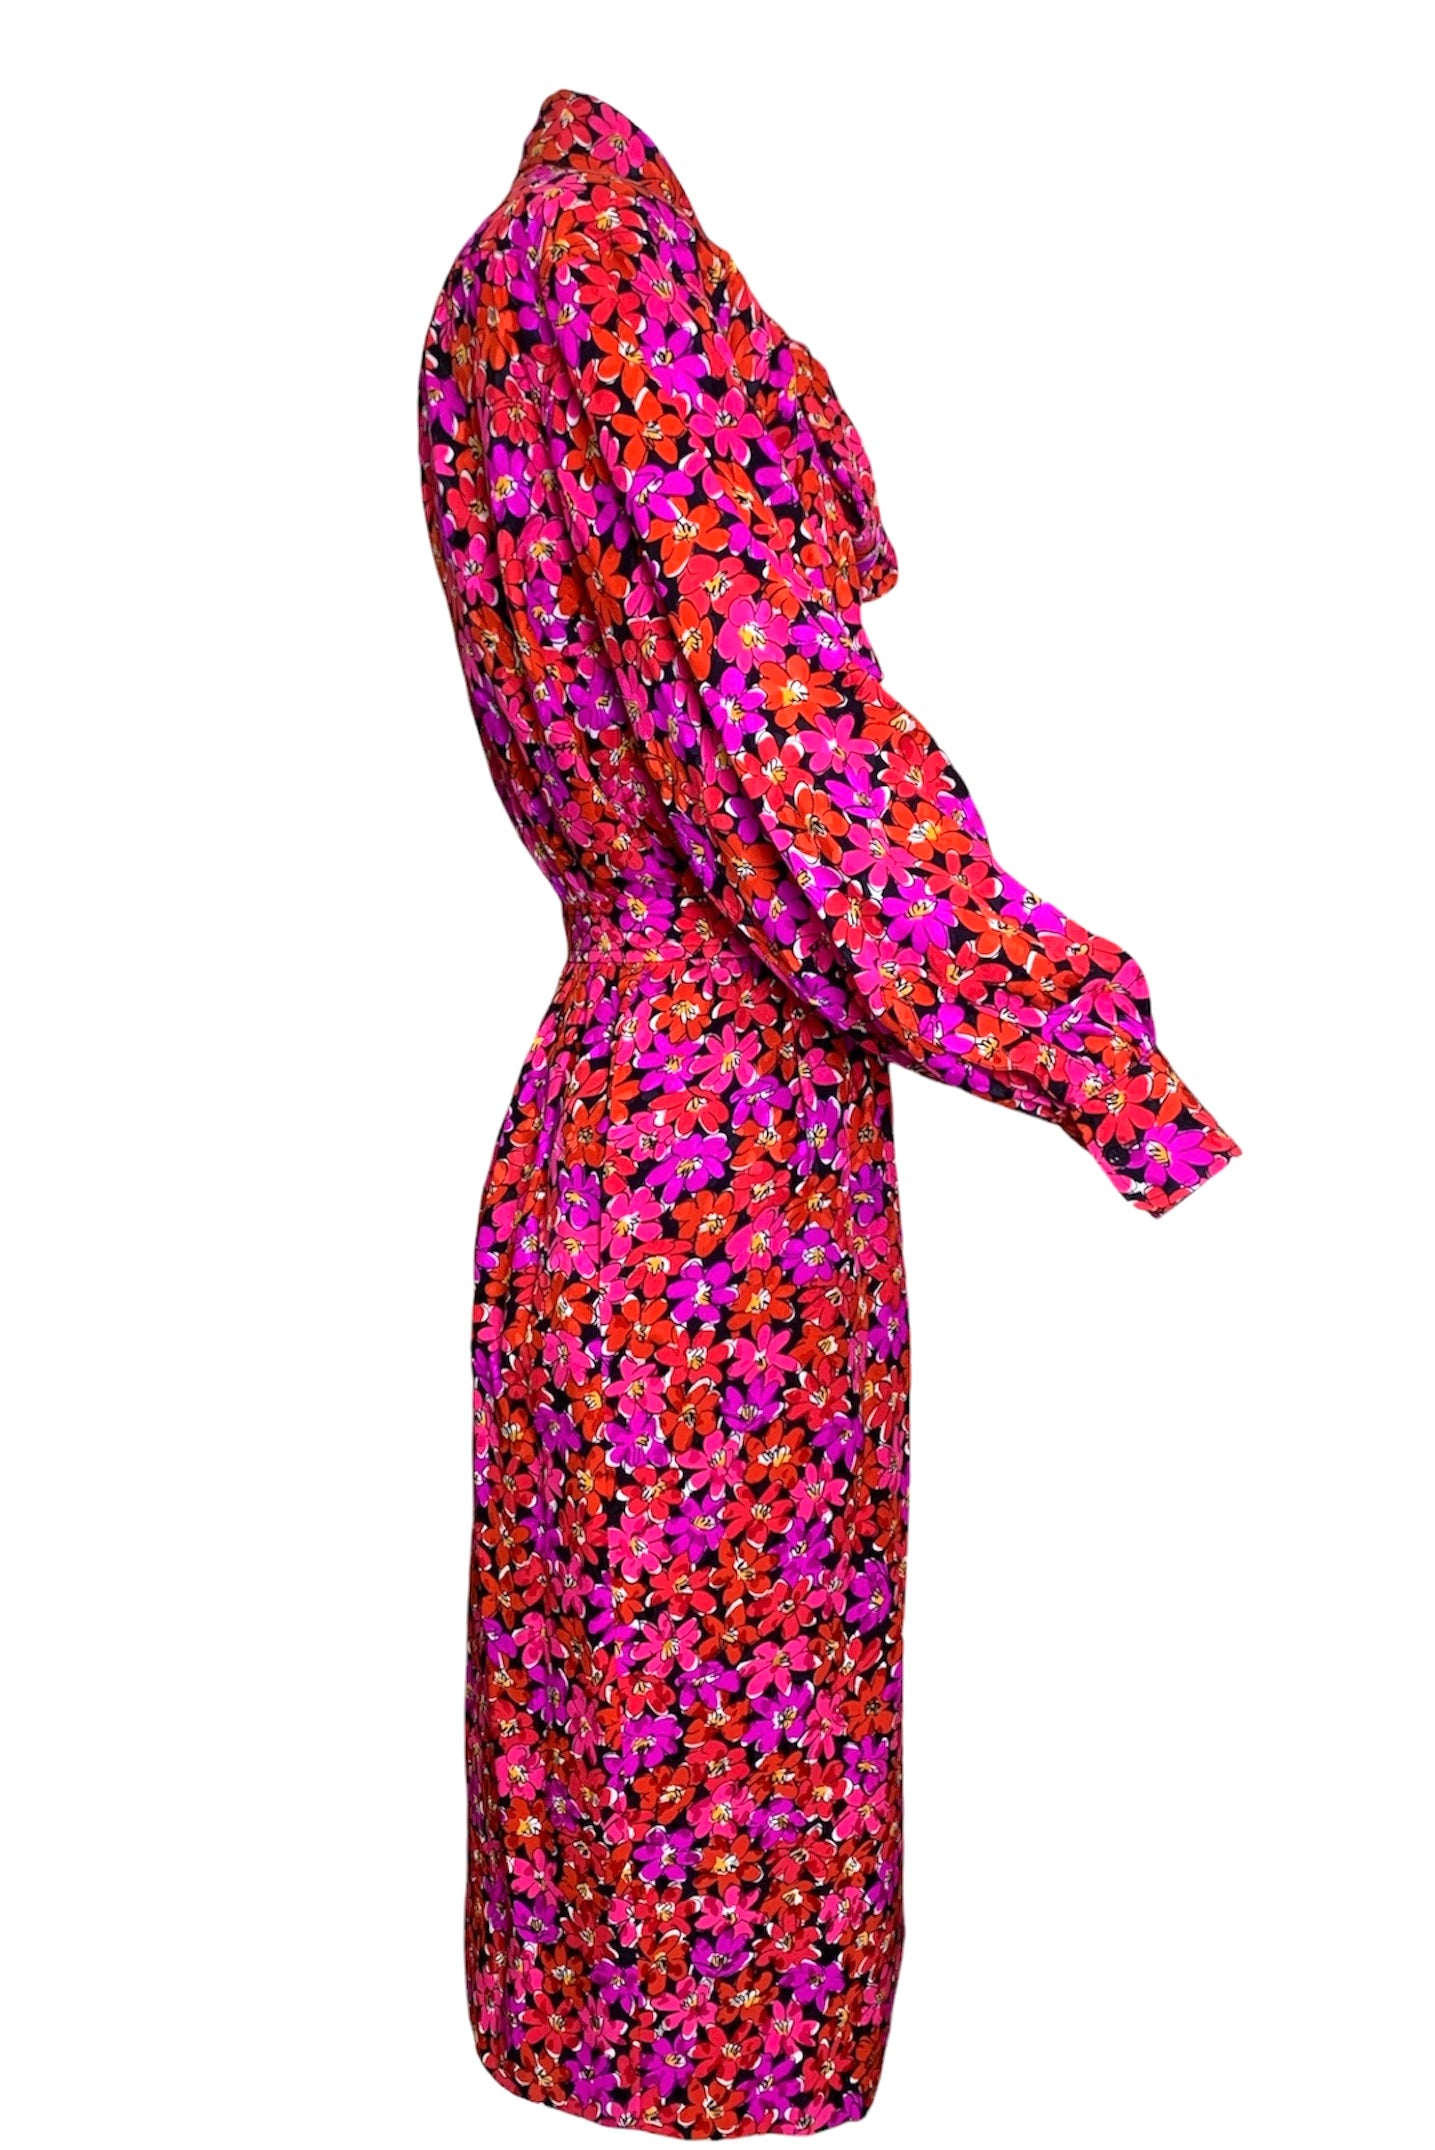 1989 Saint Laurent Magenta Silk Floral Print Dress Ensemble FULL ENSEMBLE SIDE